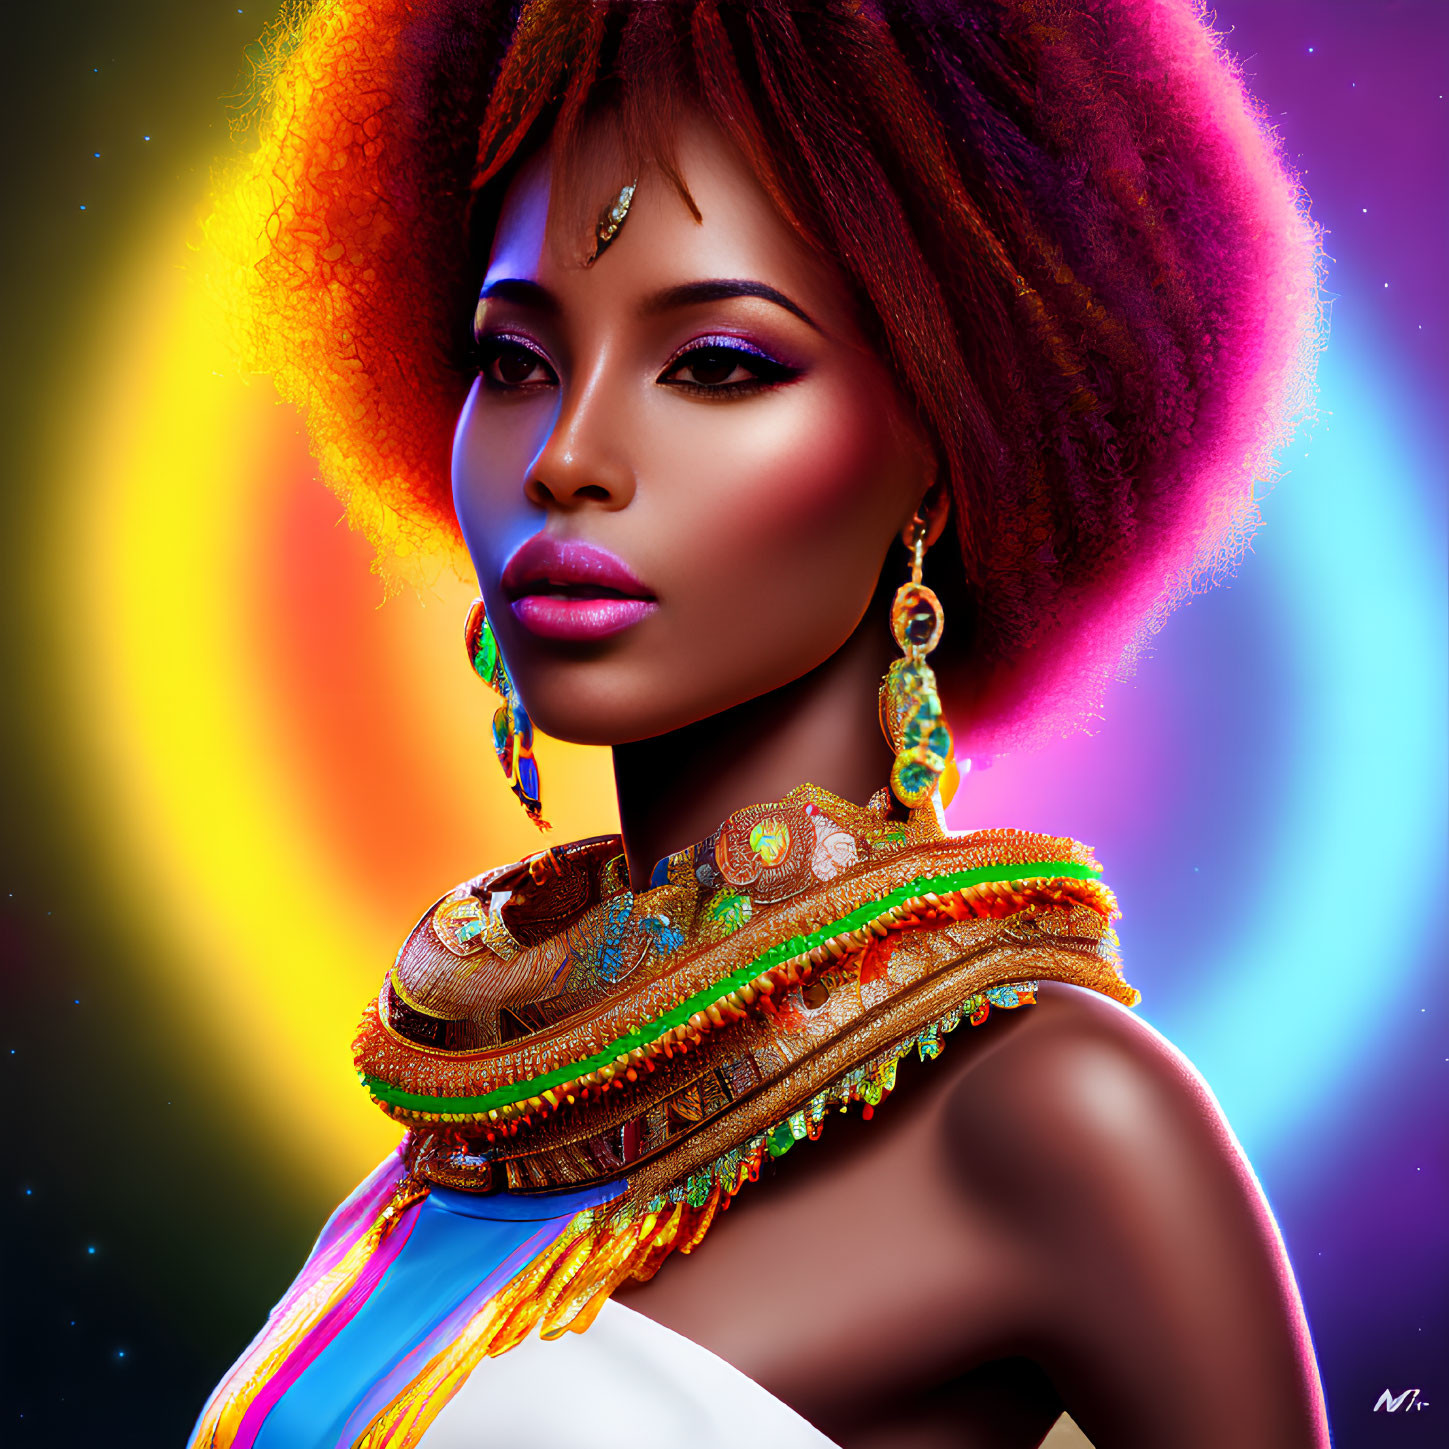 Vibrant digital artwork of woman with striking makeup and neon lighting